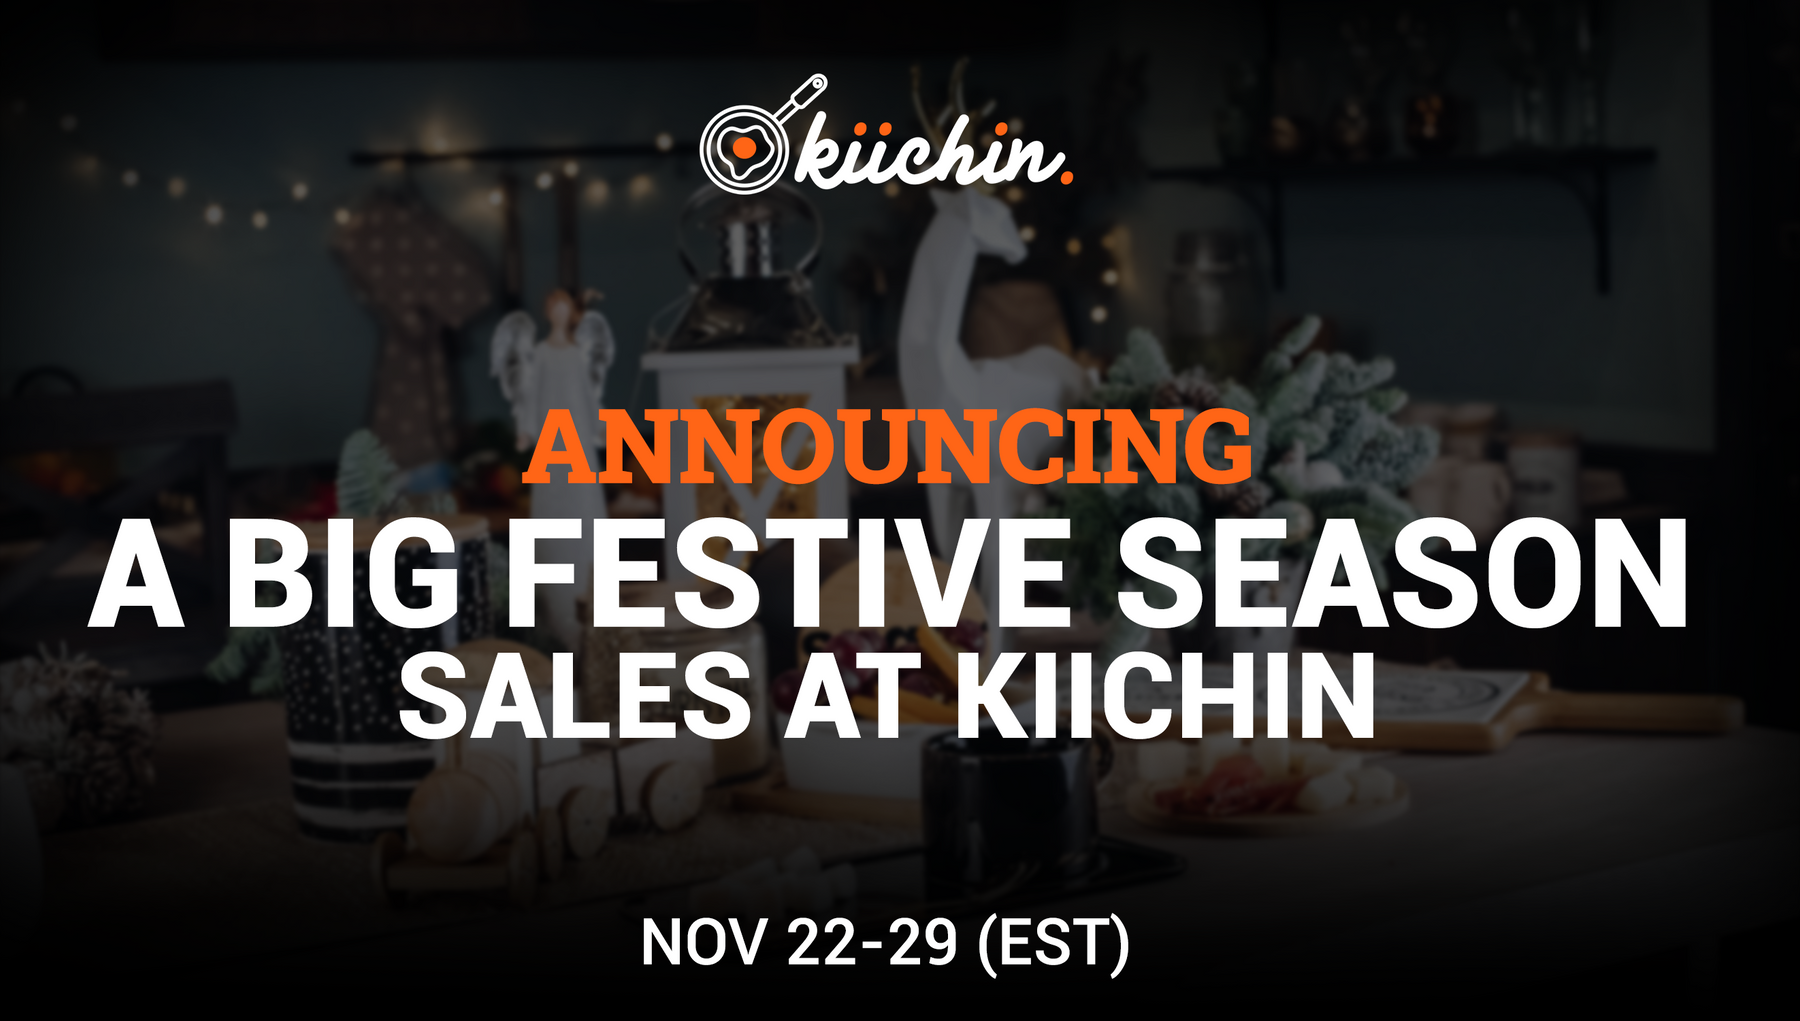 Announcing A Big Festive Season Sales At Kiichin From Nov 22-29